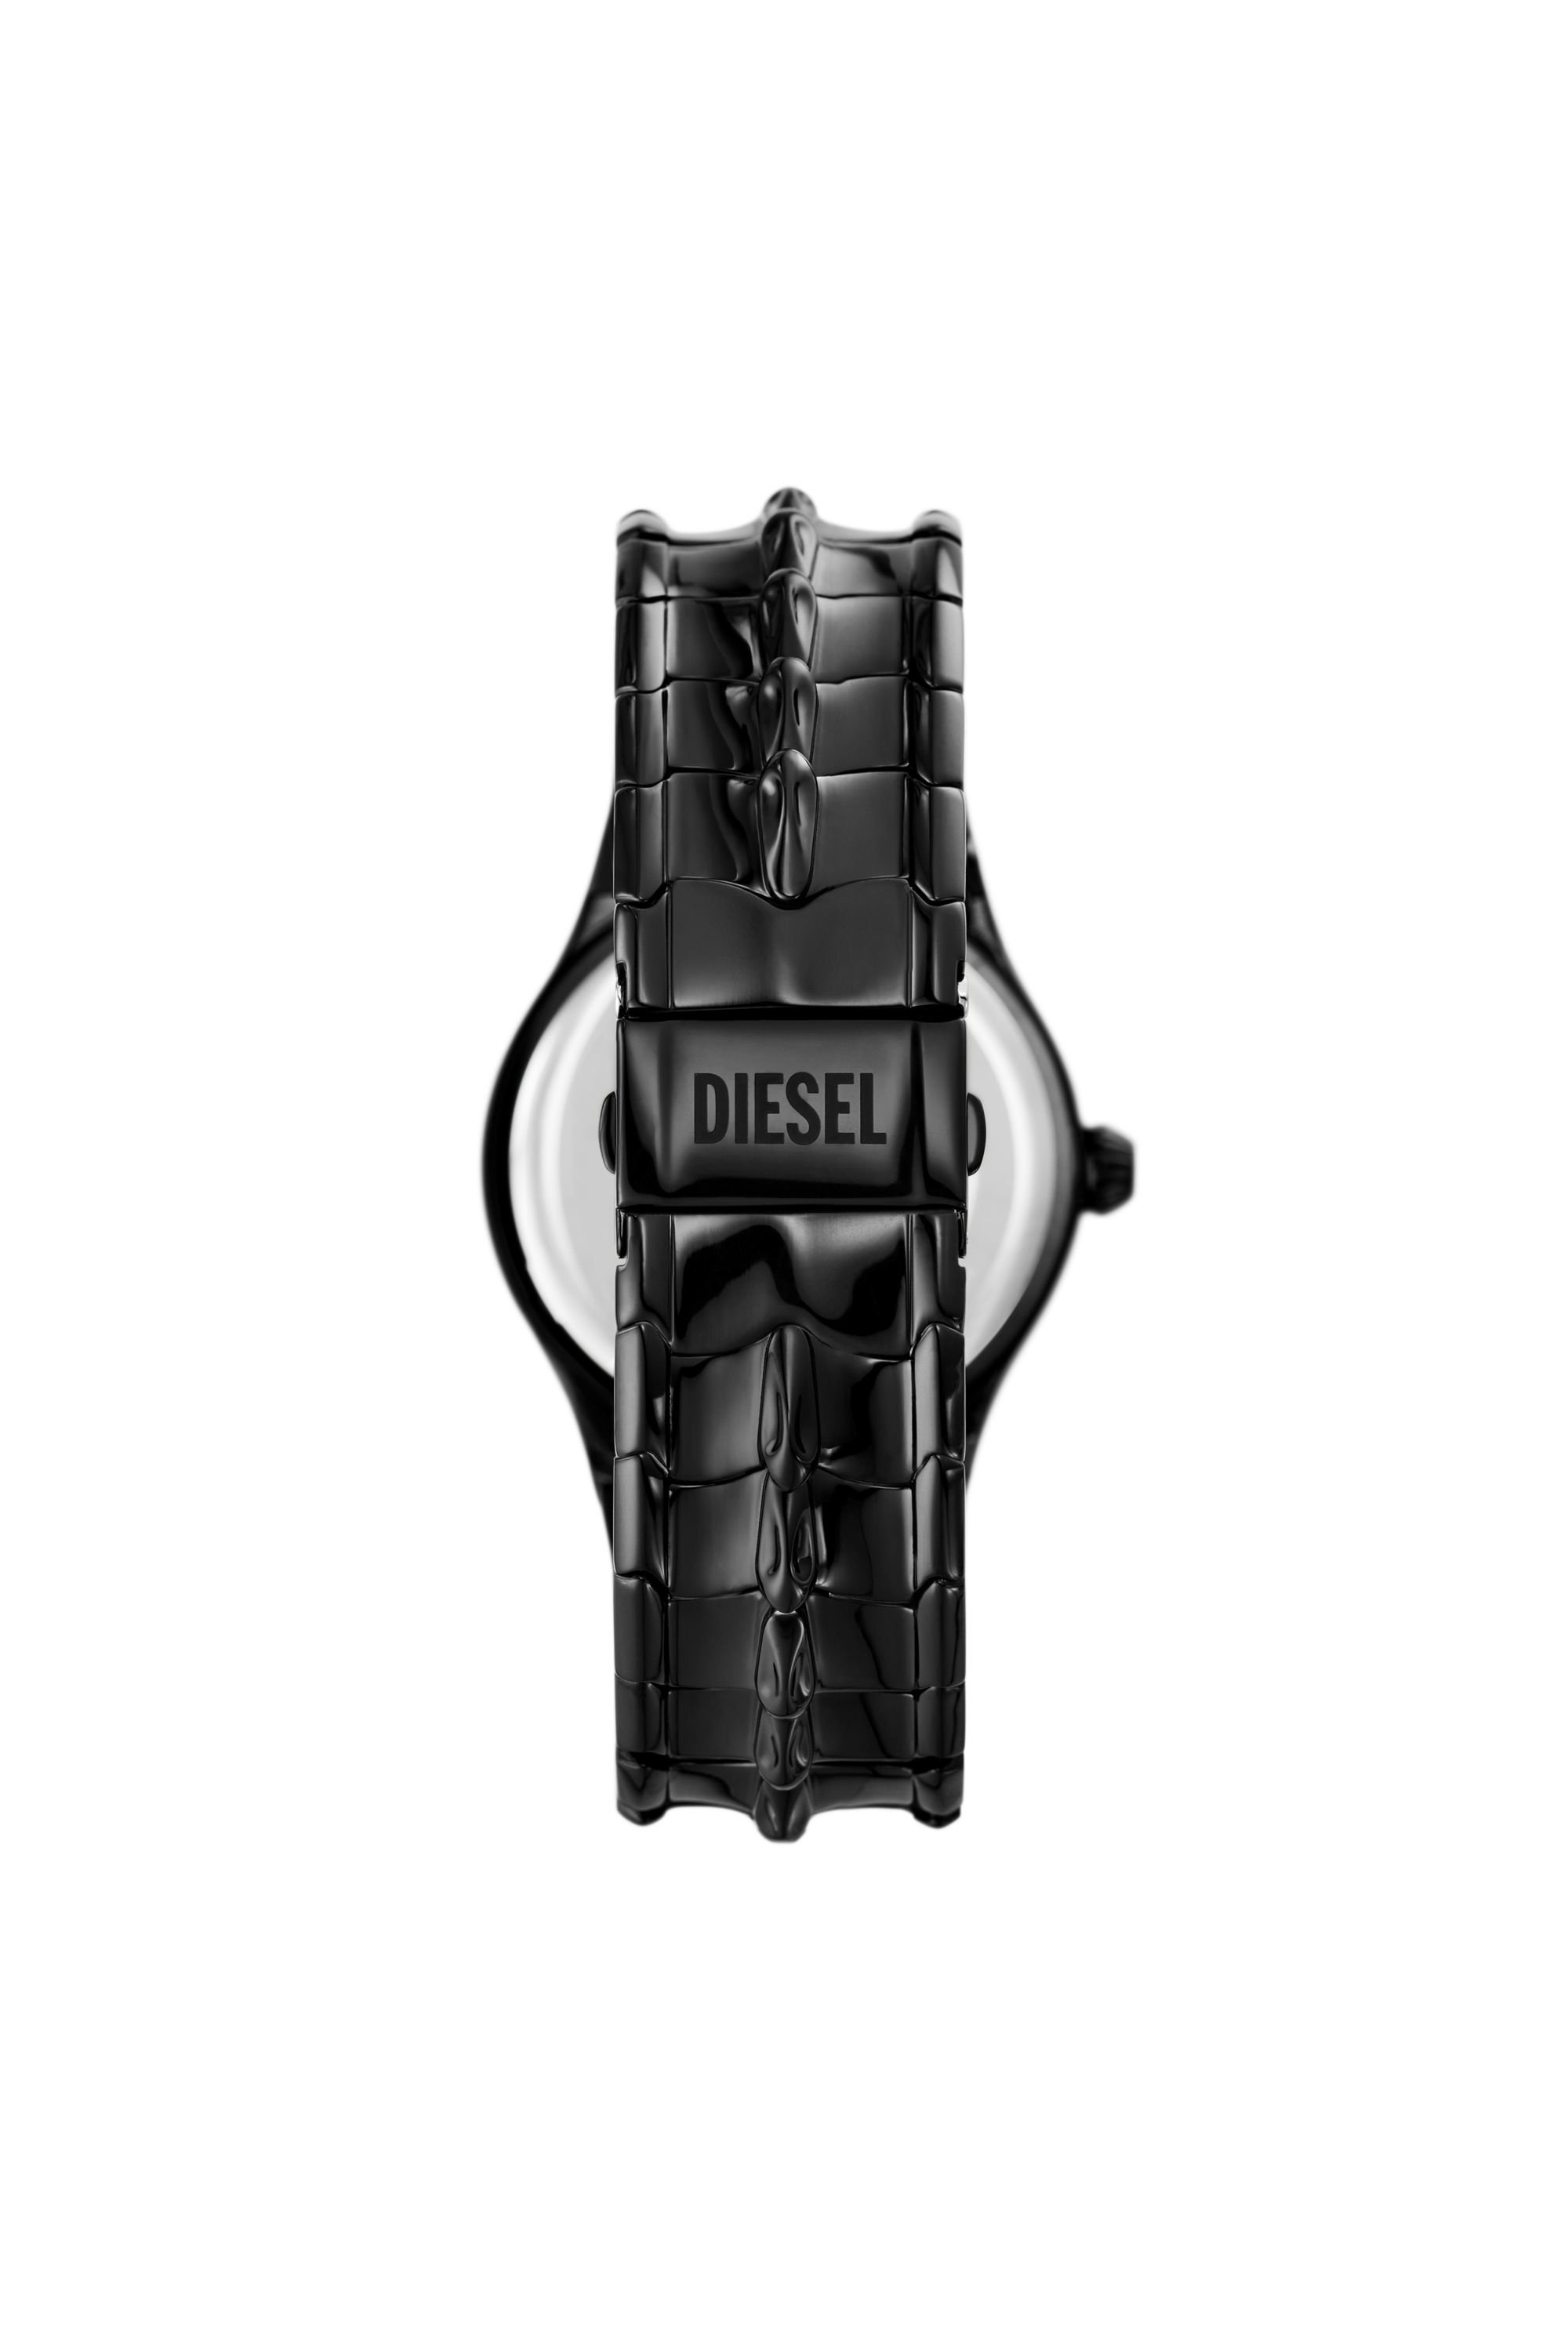 Diesel - DZ2198, Black - Image 2